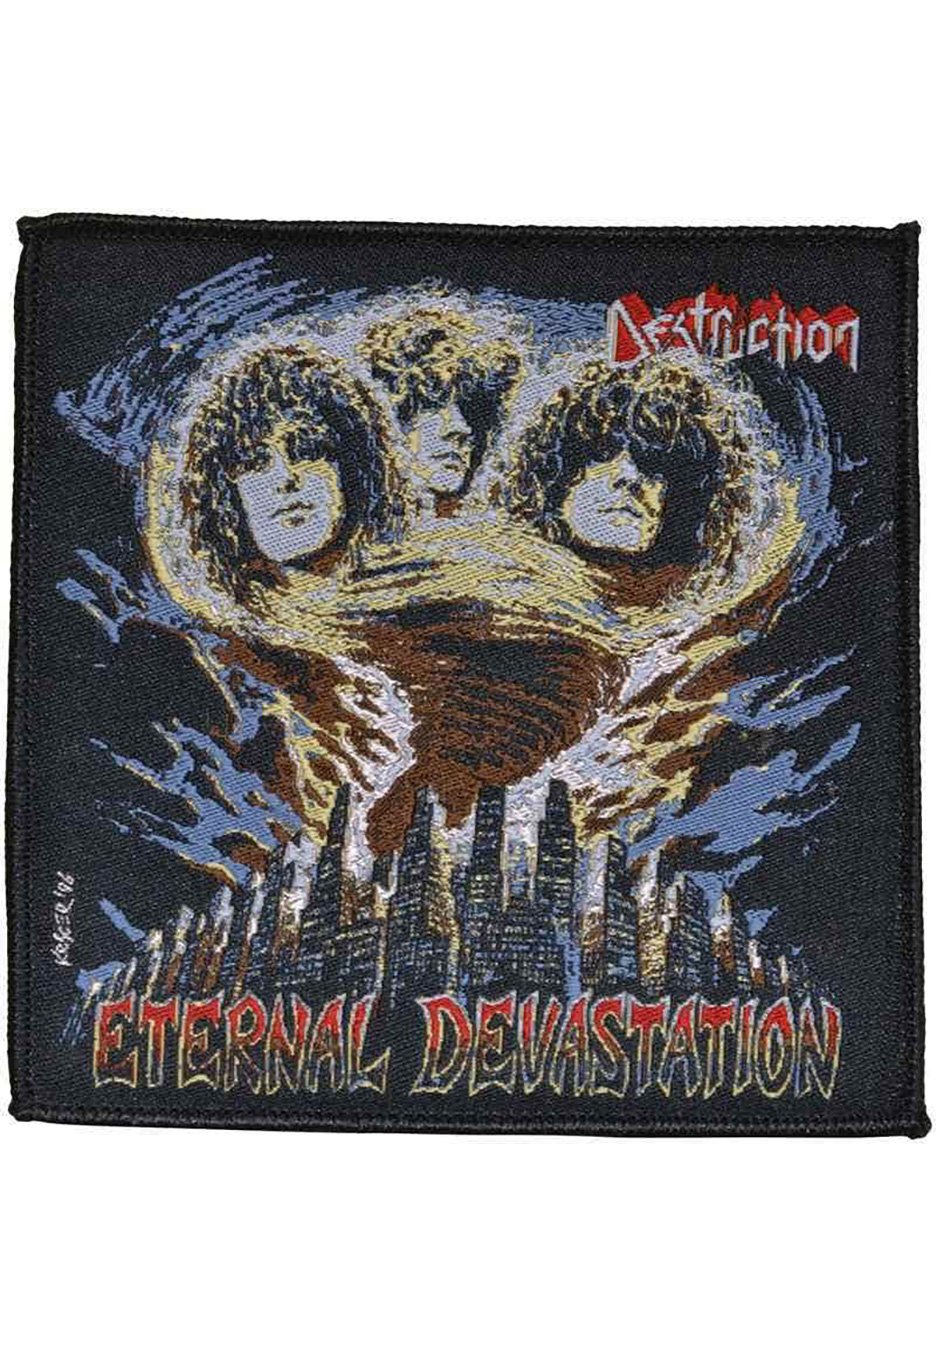 Destruction - Eternal Devastation - Patch